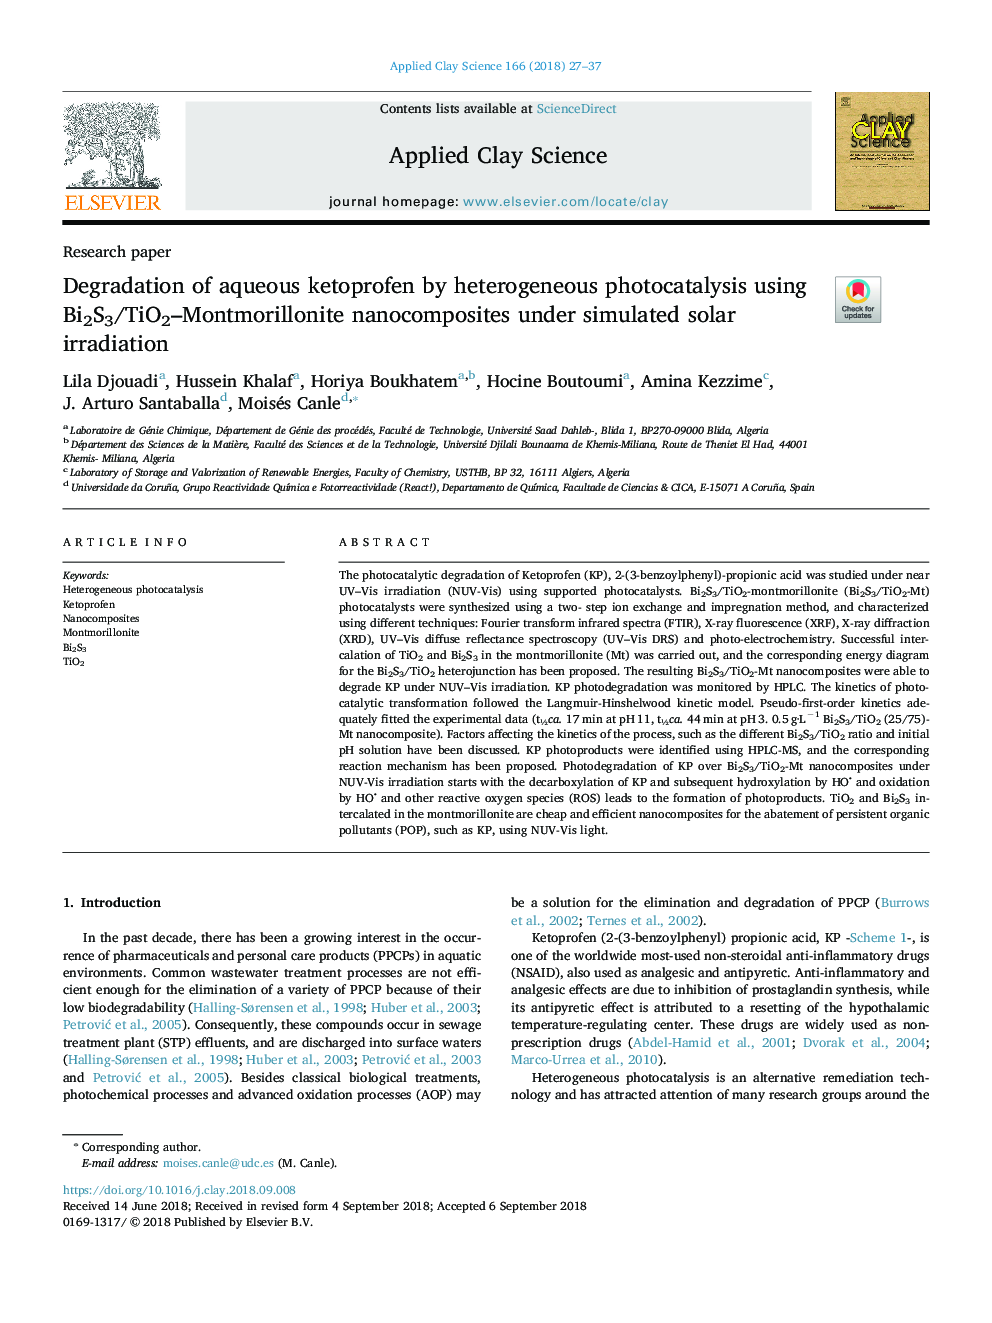 Degradation of aqueous ketoprofen by heterogeneous photocatalysis using Bi2S3/TiO2-Montmorillonite nanocomposites under simulated solar irradiation